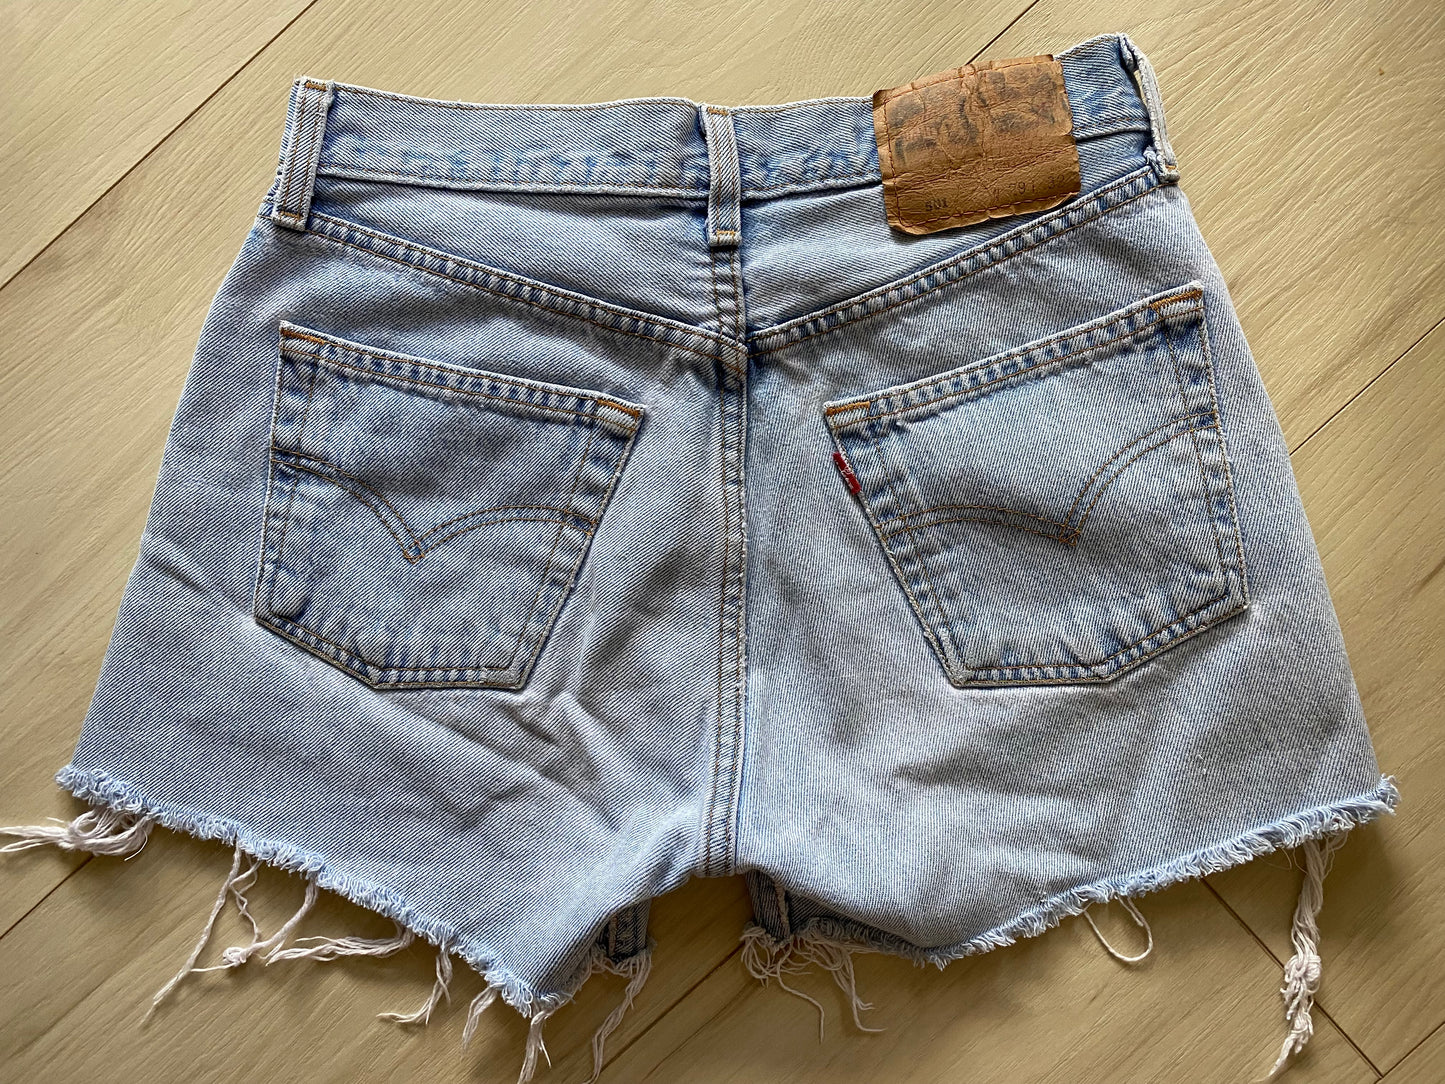 Size 26 Levi’s 501 jean shorts